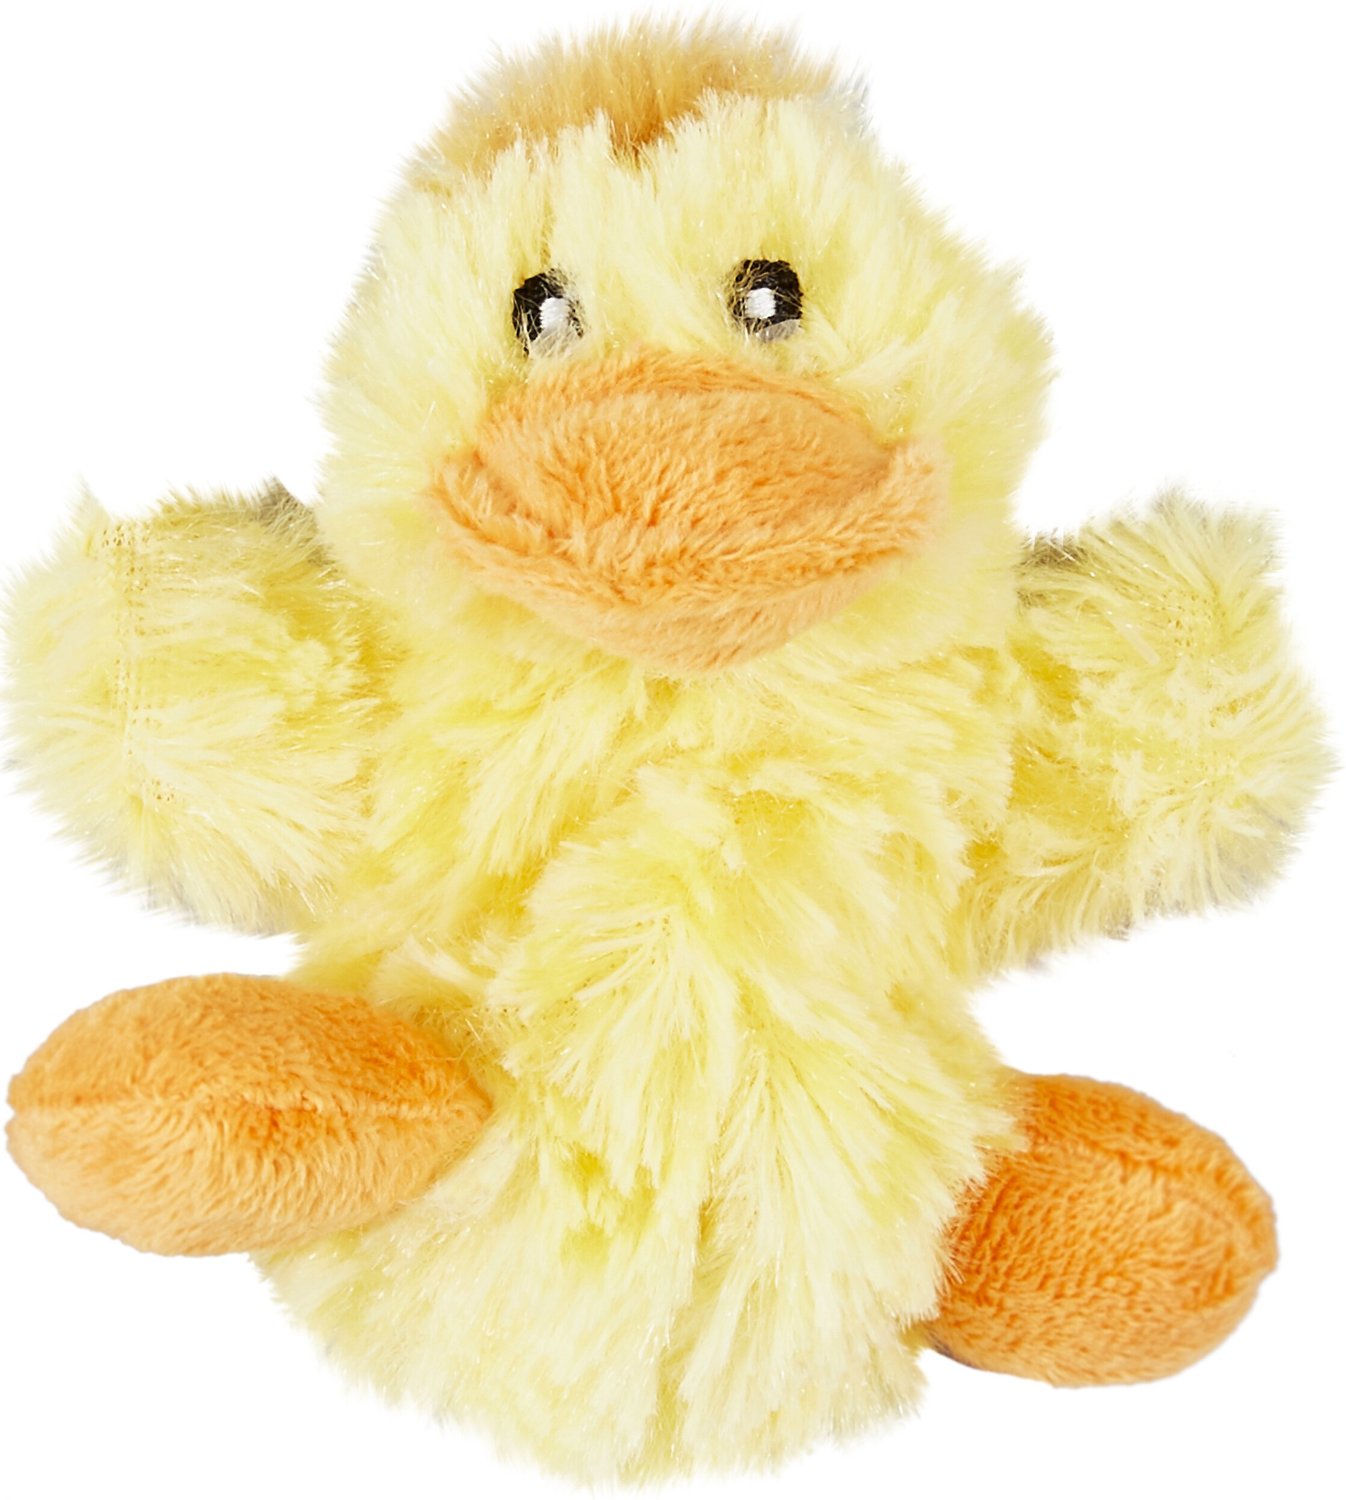 duck teddy